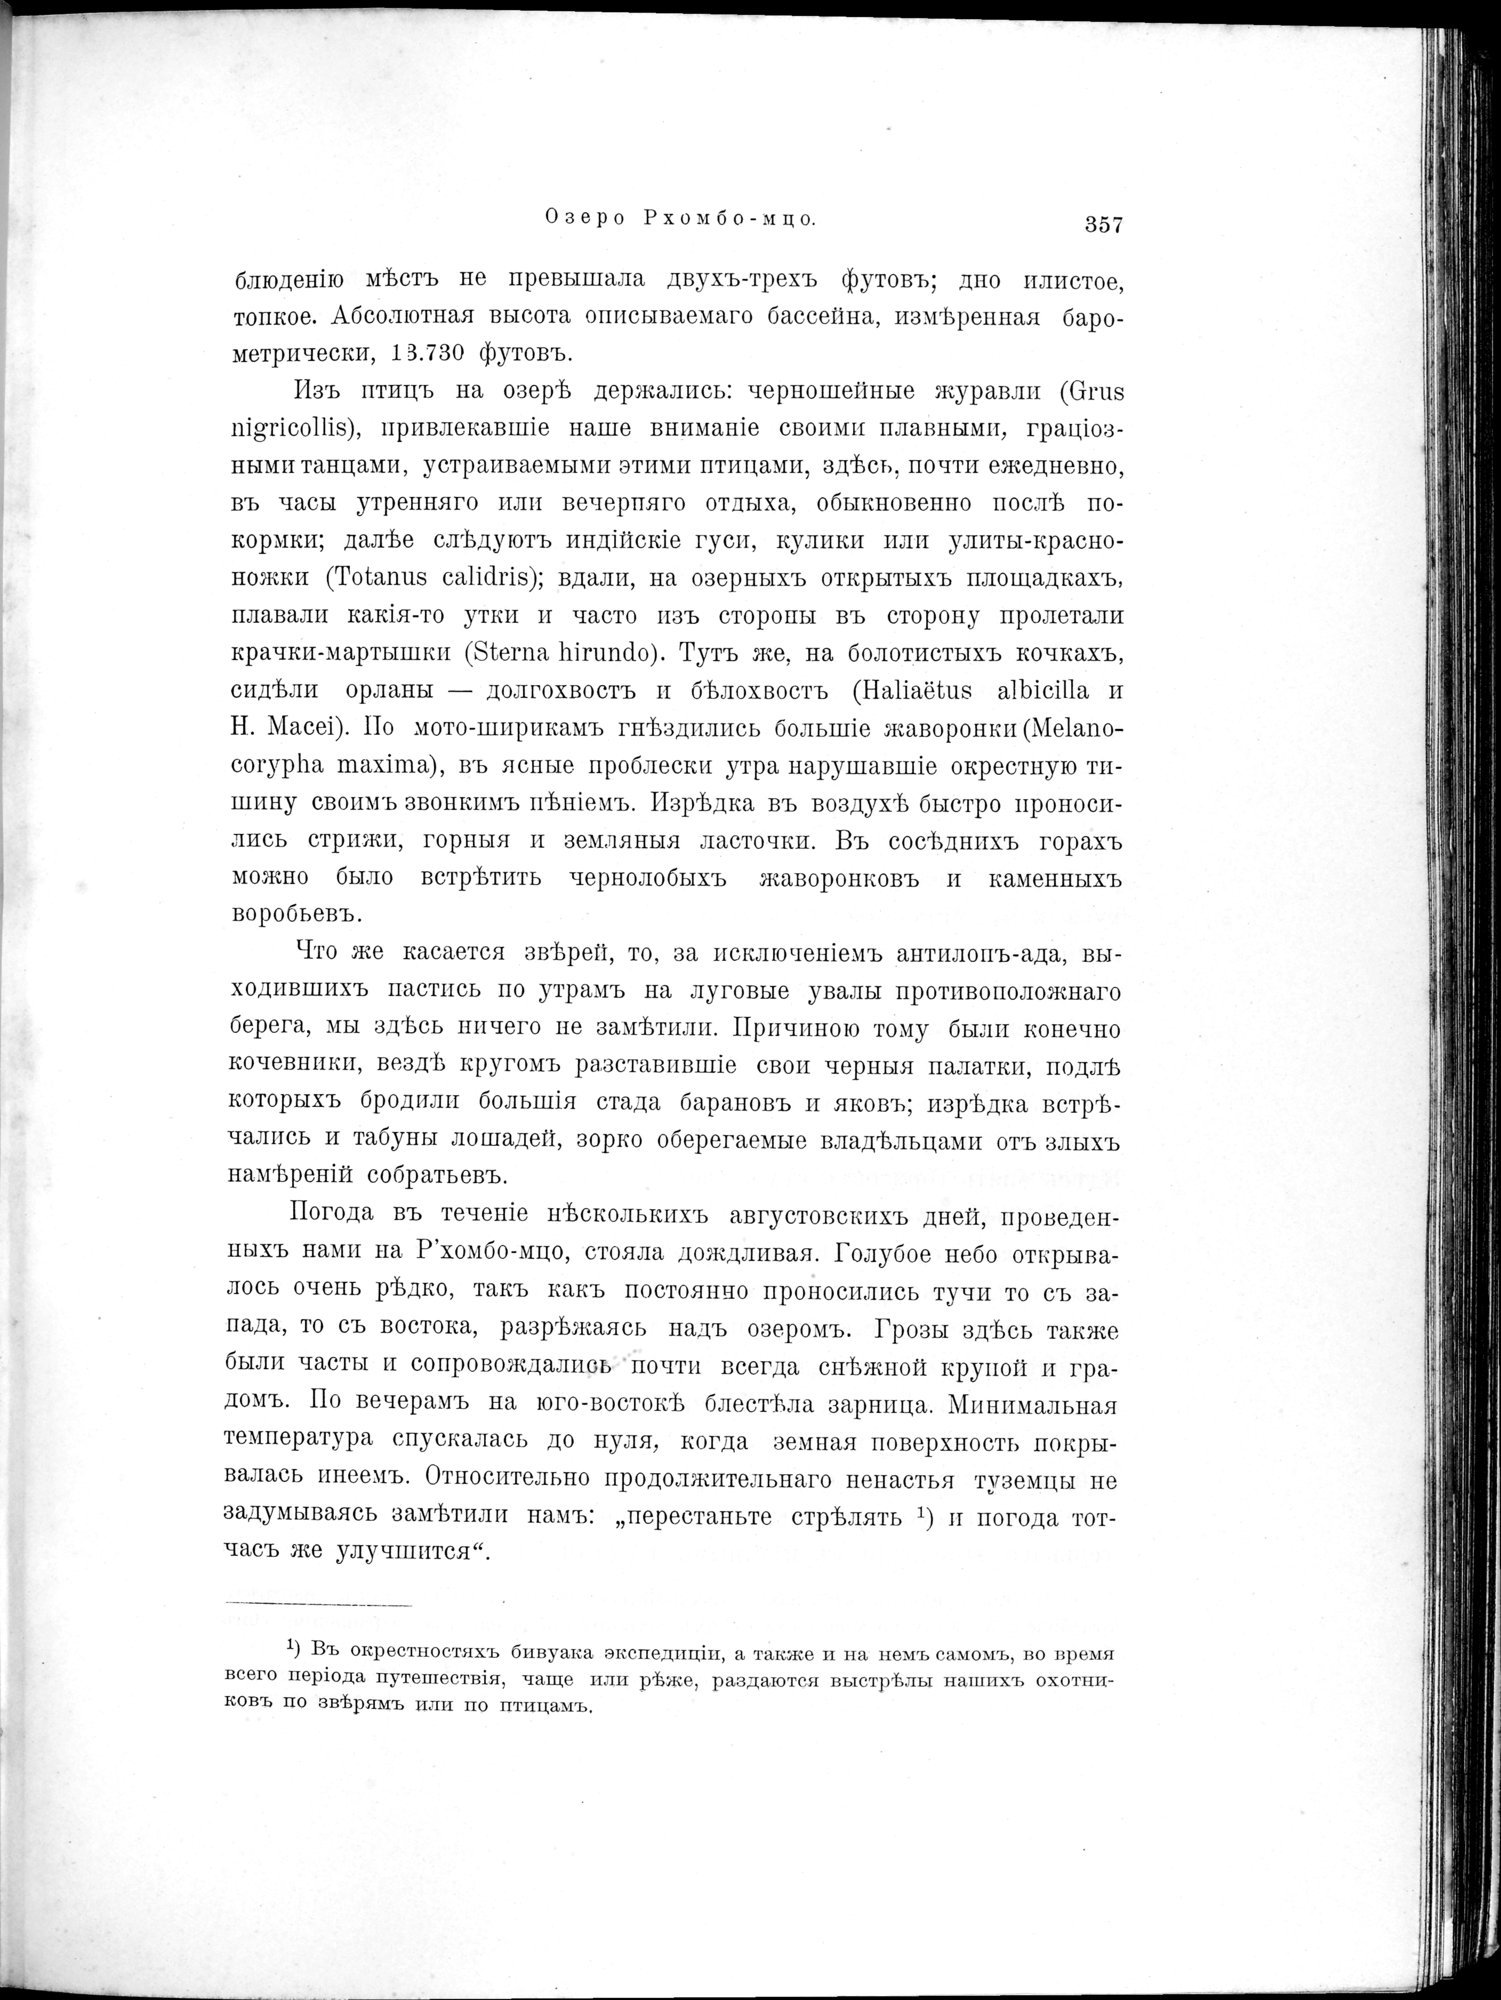 Mongoliia i Kam : vol.2 / Page 139 (Grayscale High Resolution Image)